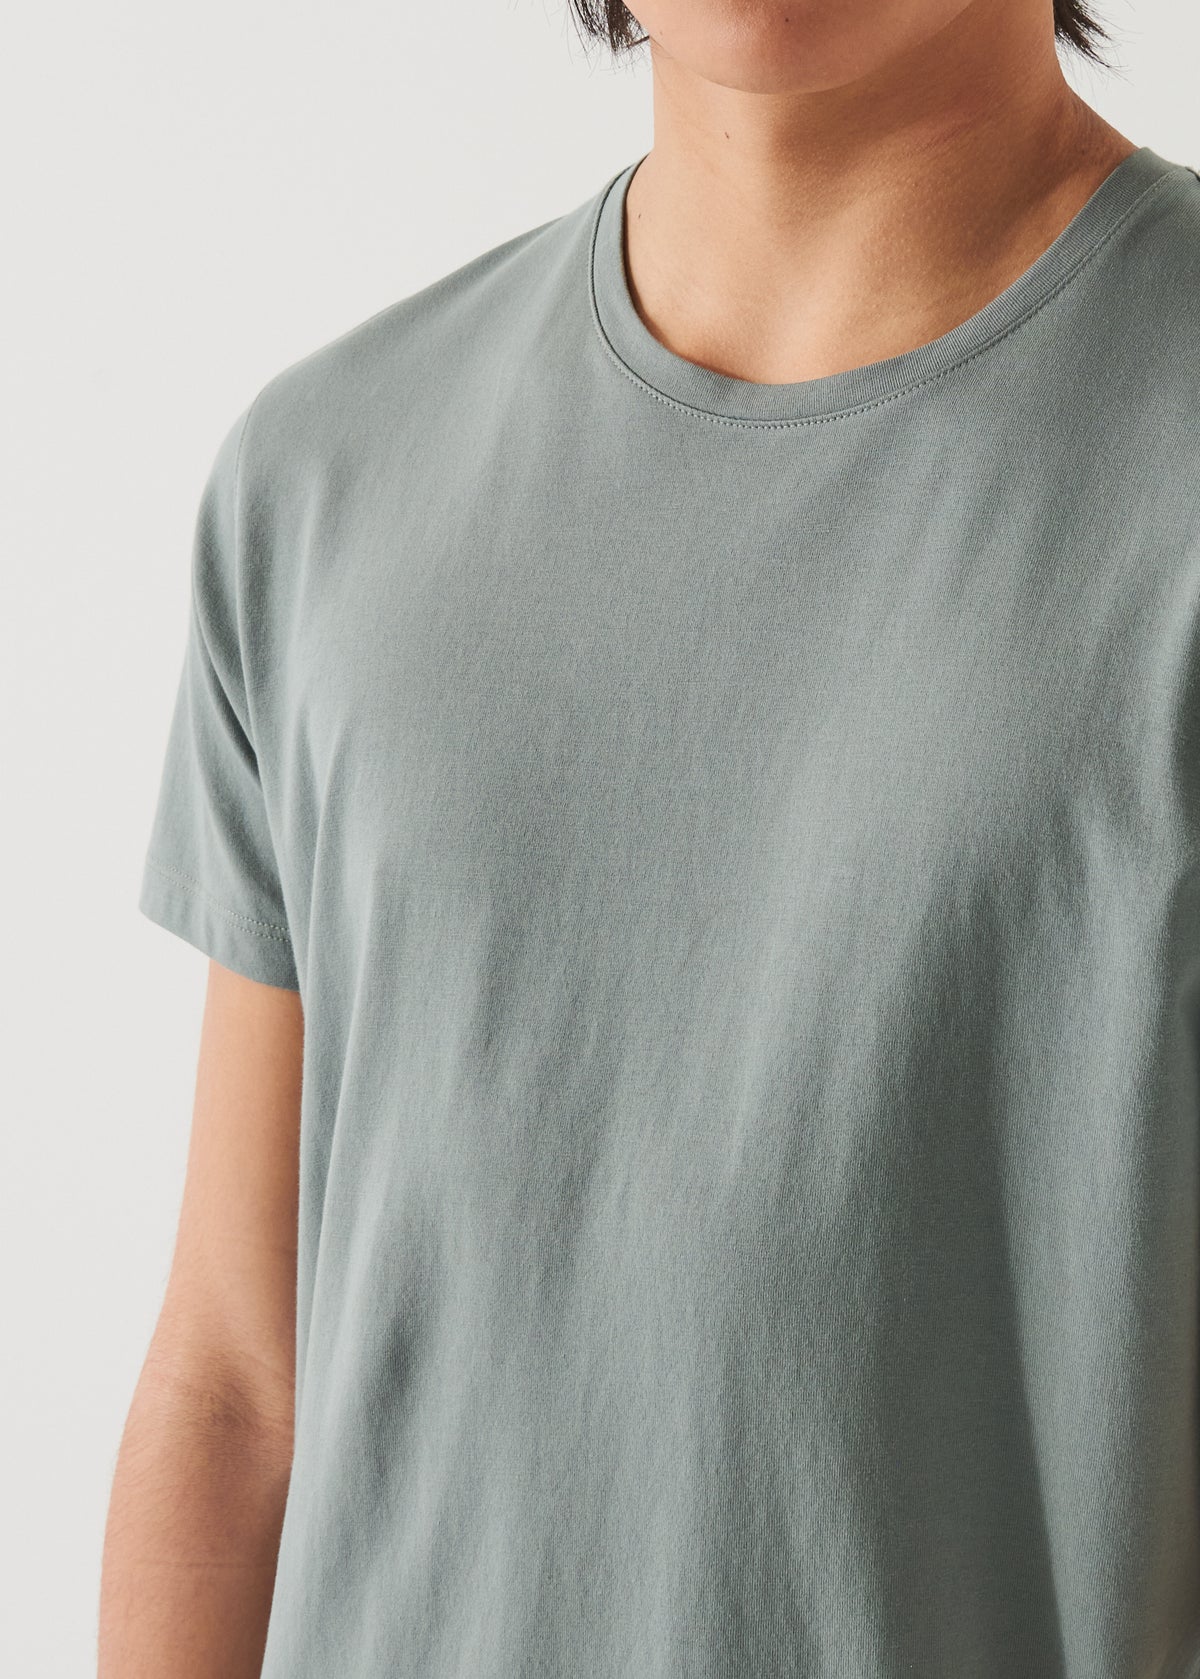 Patrick Assaraf Iconic Pima Cotton Stretch T-Shirt in Bedrock